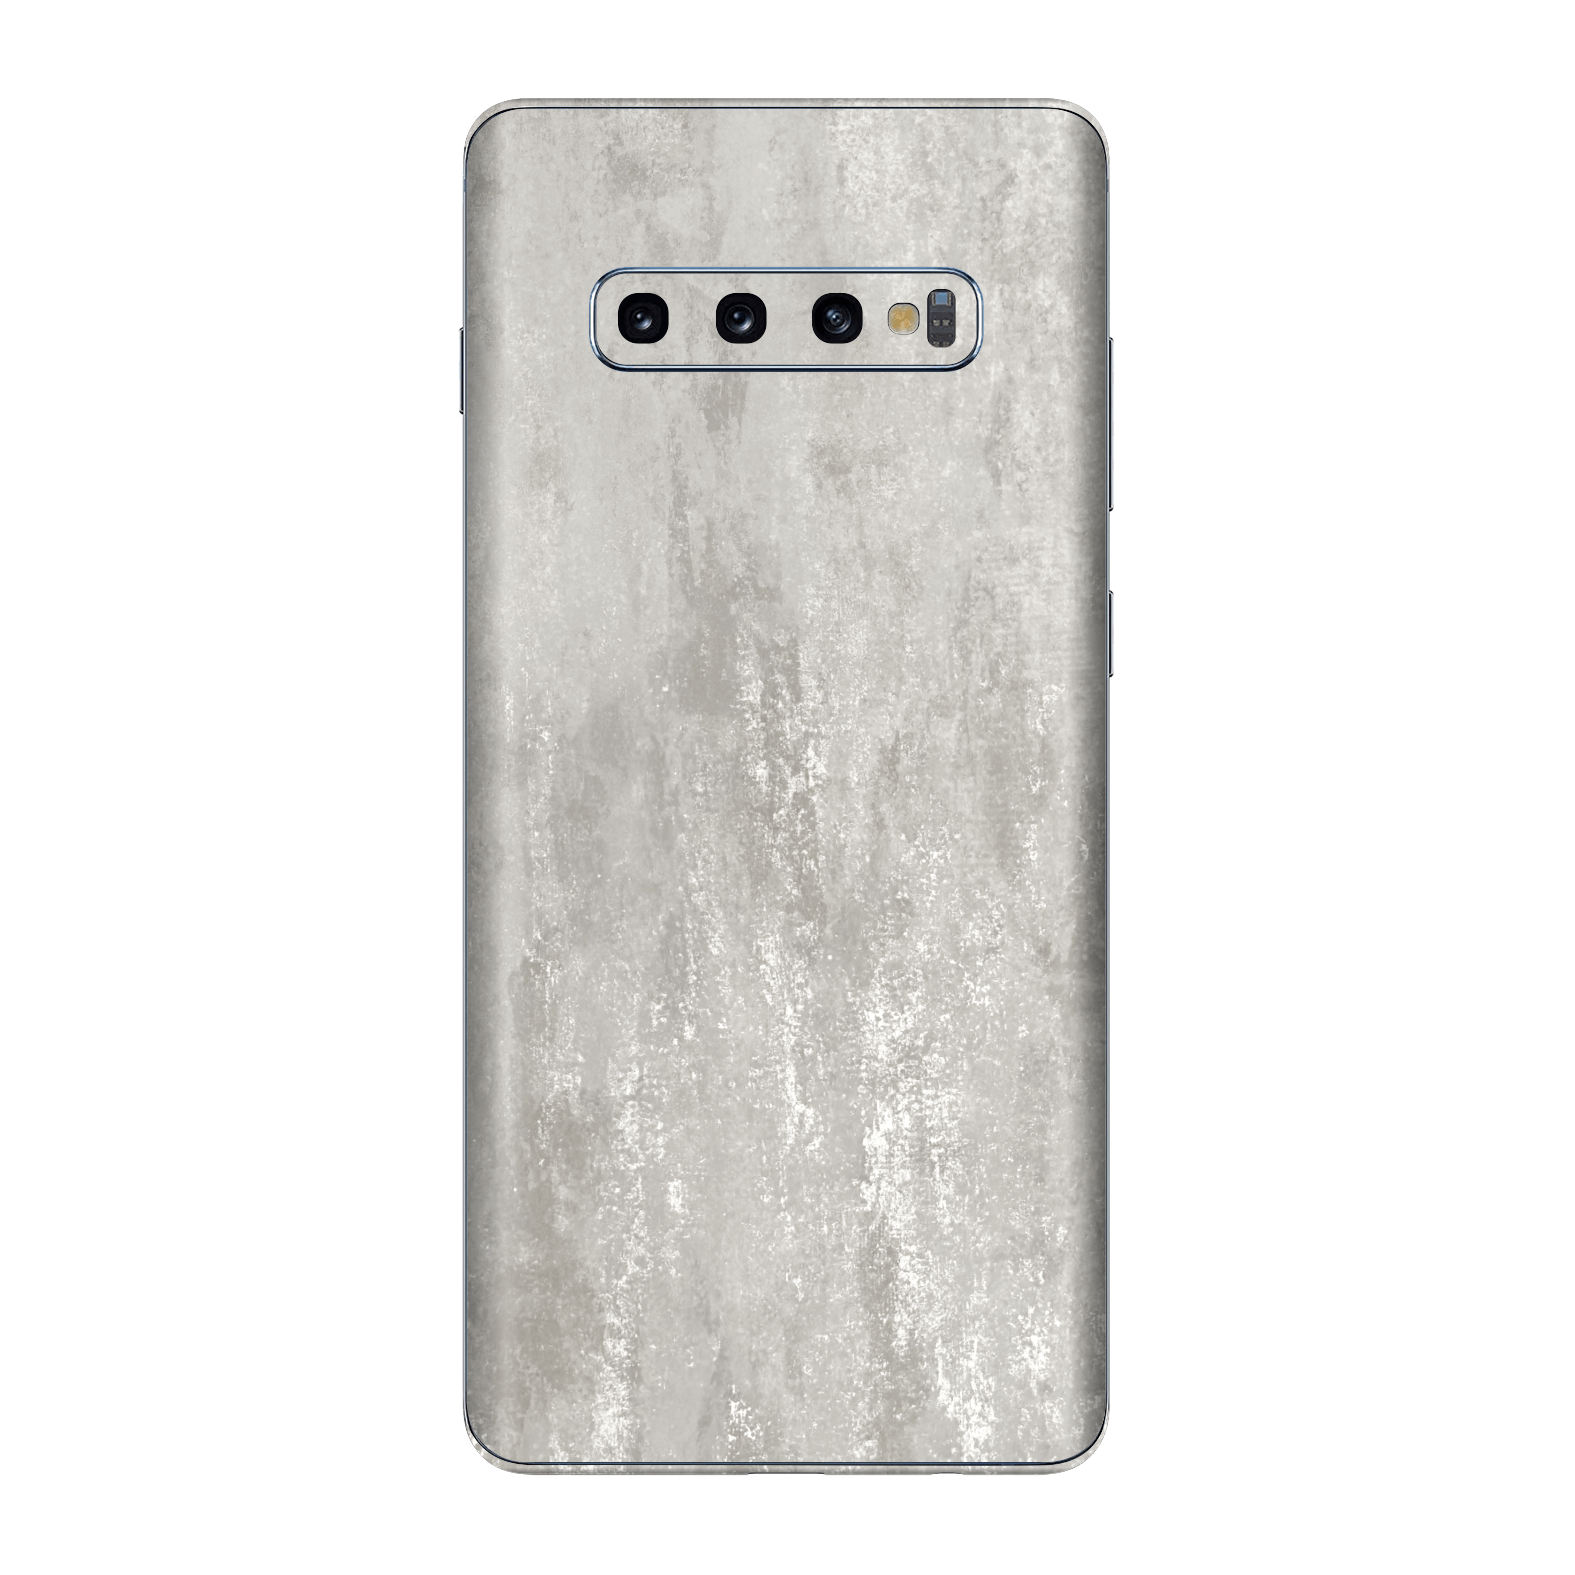 Samsung Galaxy S10+ PLUS Luxuria Silver Stone Skin Wrap Sticker Decal Cover Protector by EasySkinz | EasySkinz.com